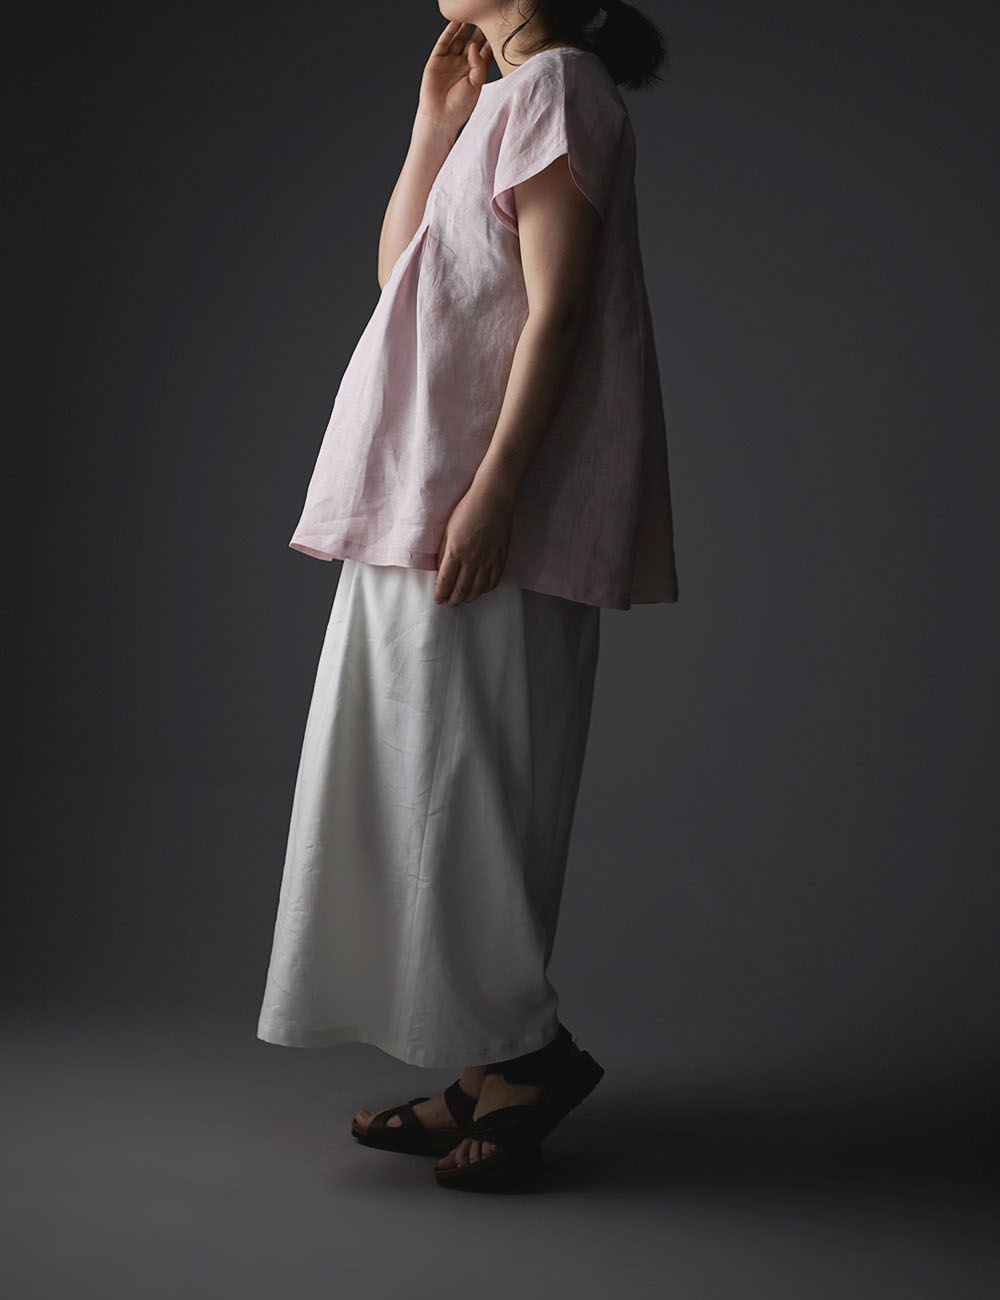 【wafu】雅亜麻 Double-pleated blouse 2重ヒダのリネンブラウス 薄地 / 桜色(さくらいろ) t039a-sak1